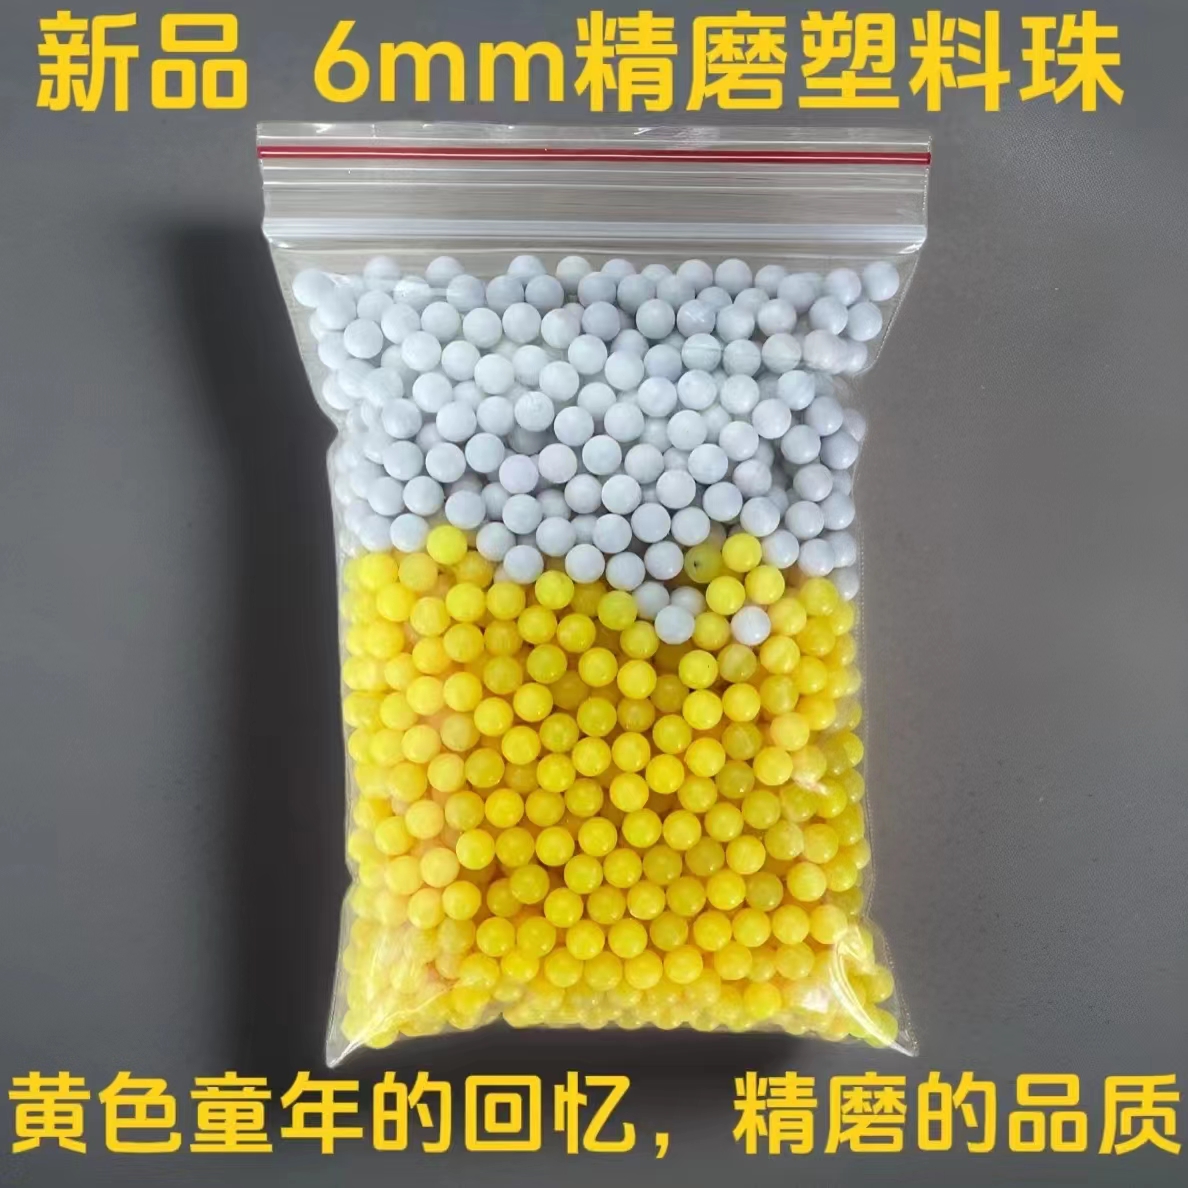 6mm塑料球精磨黄色新品